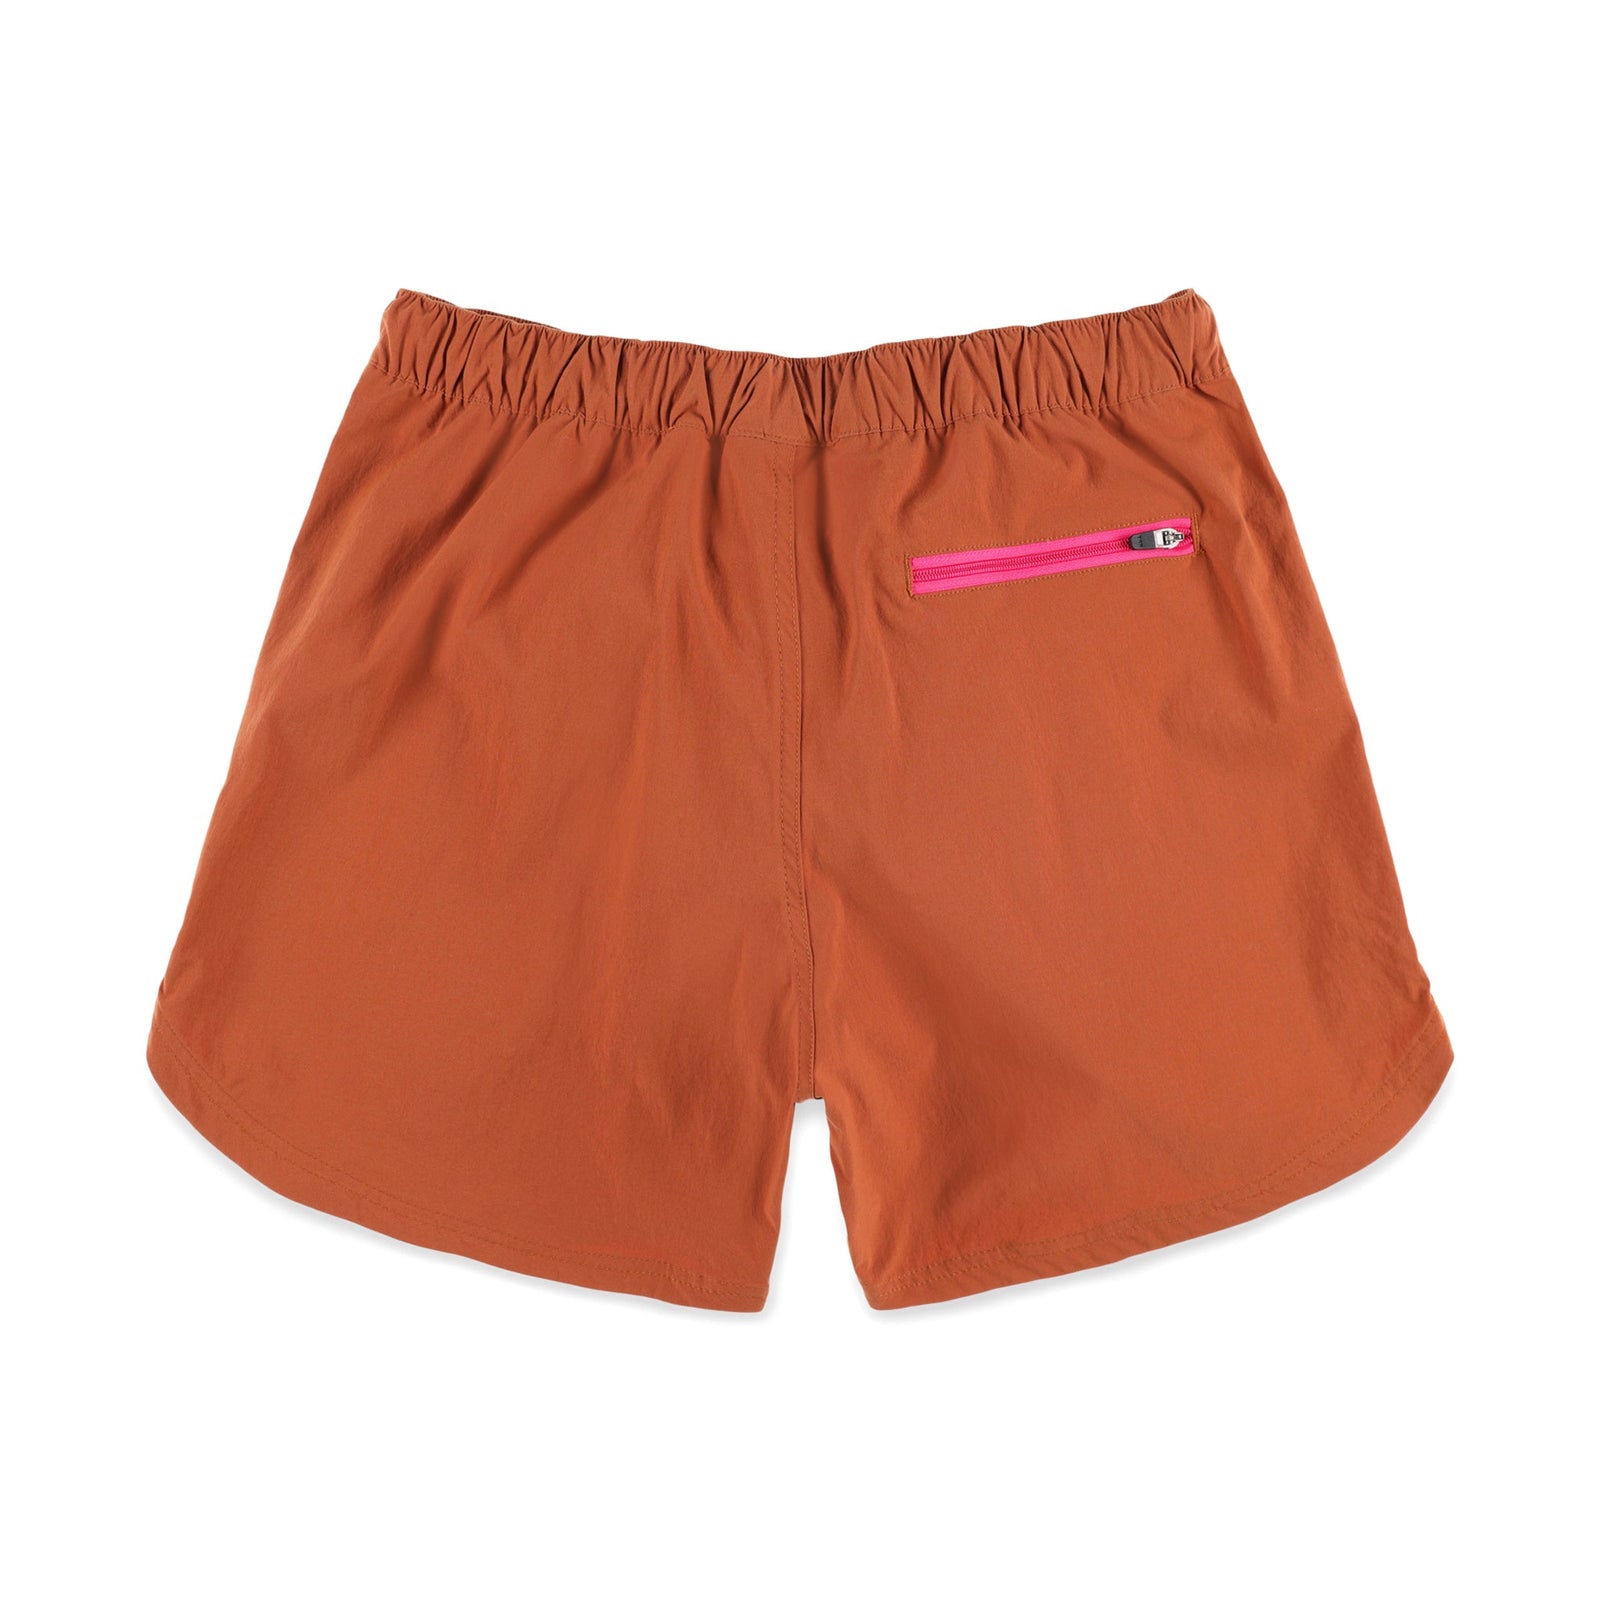 Back zipper pocket on Topo Designs Women's River quick-dry swim Shorts in "Brick" orange.